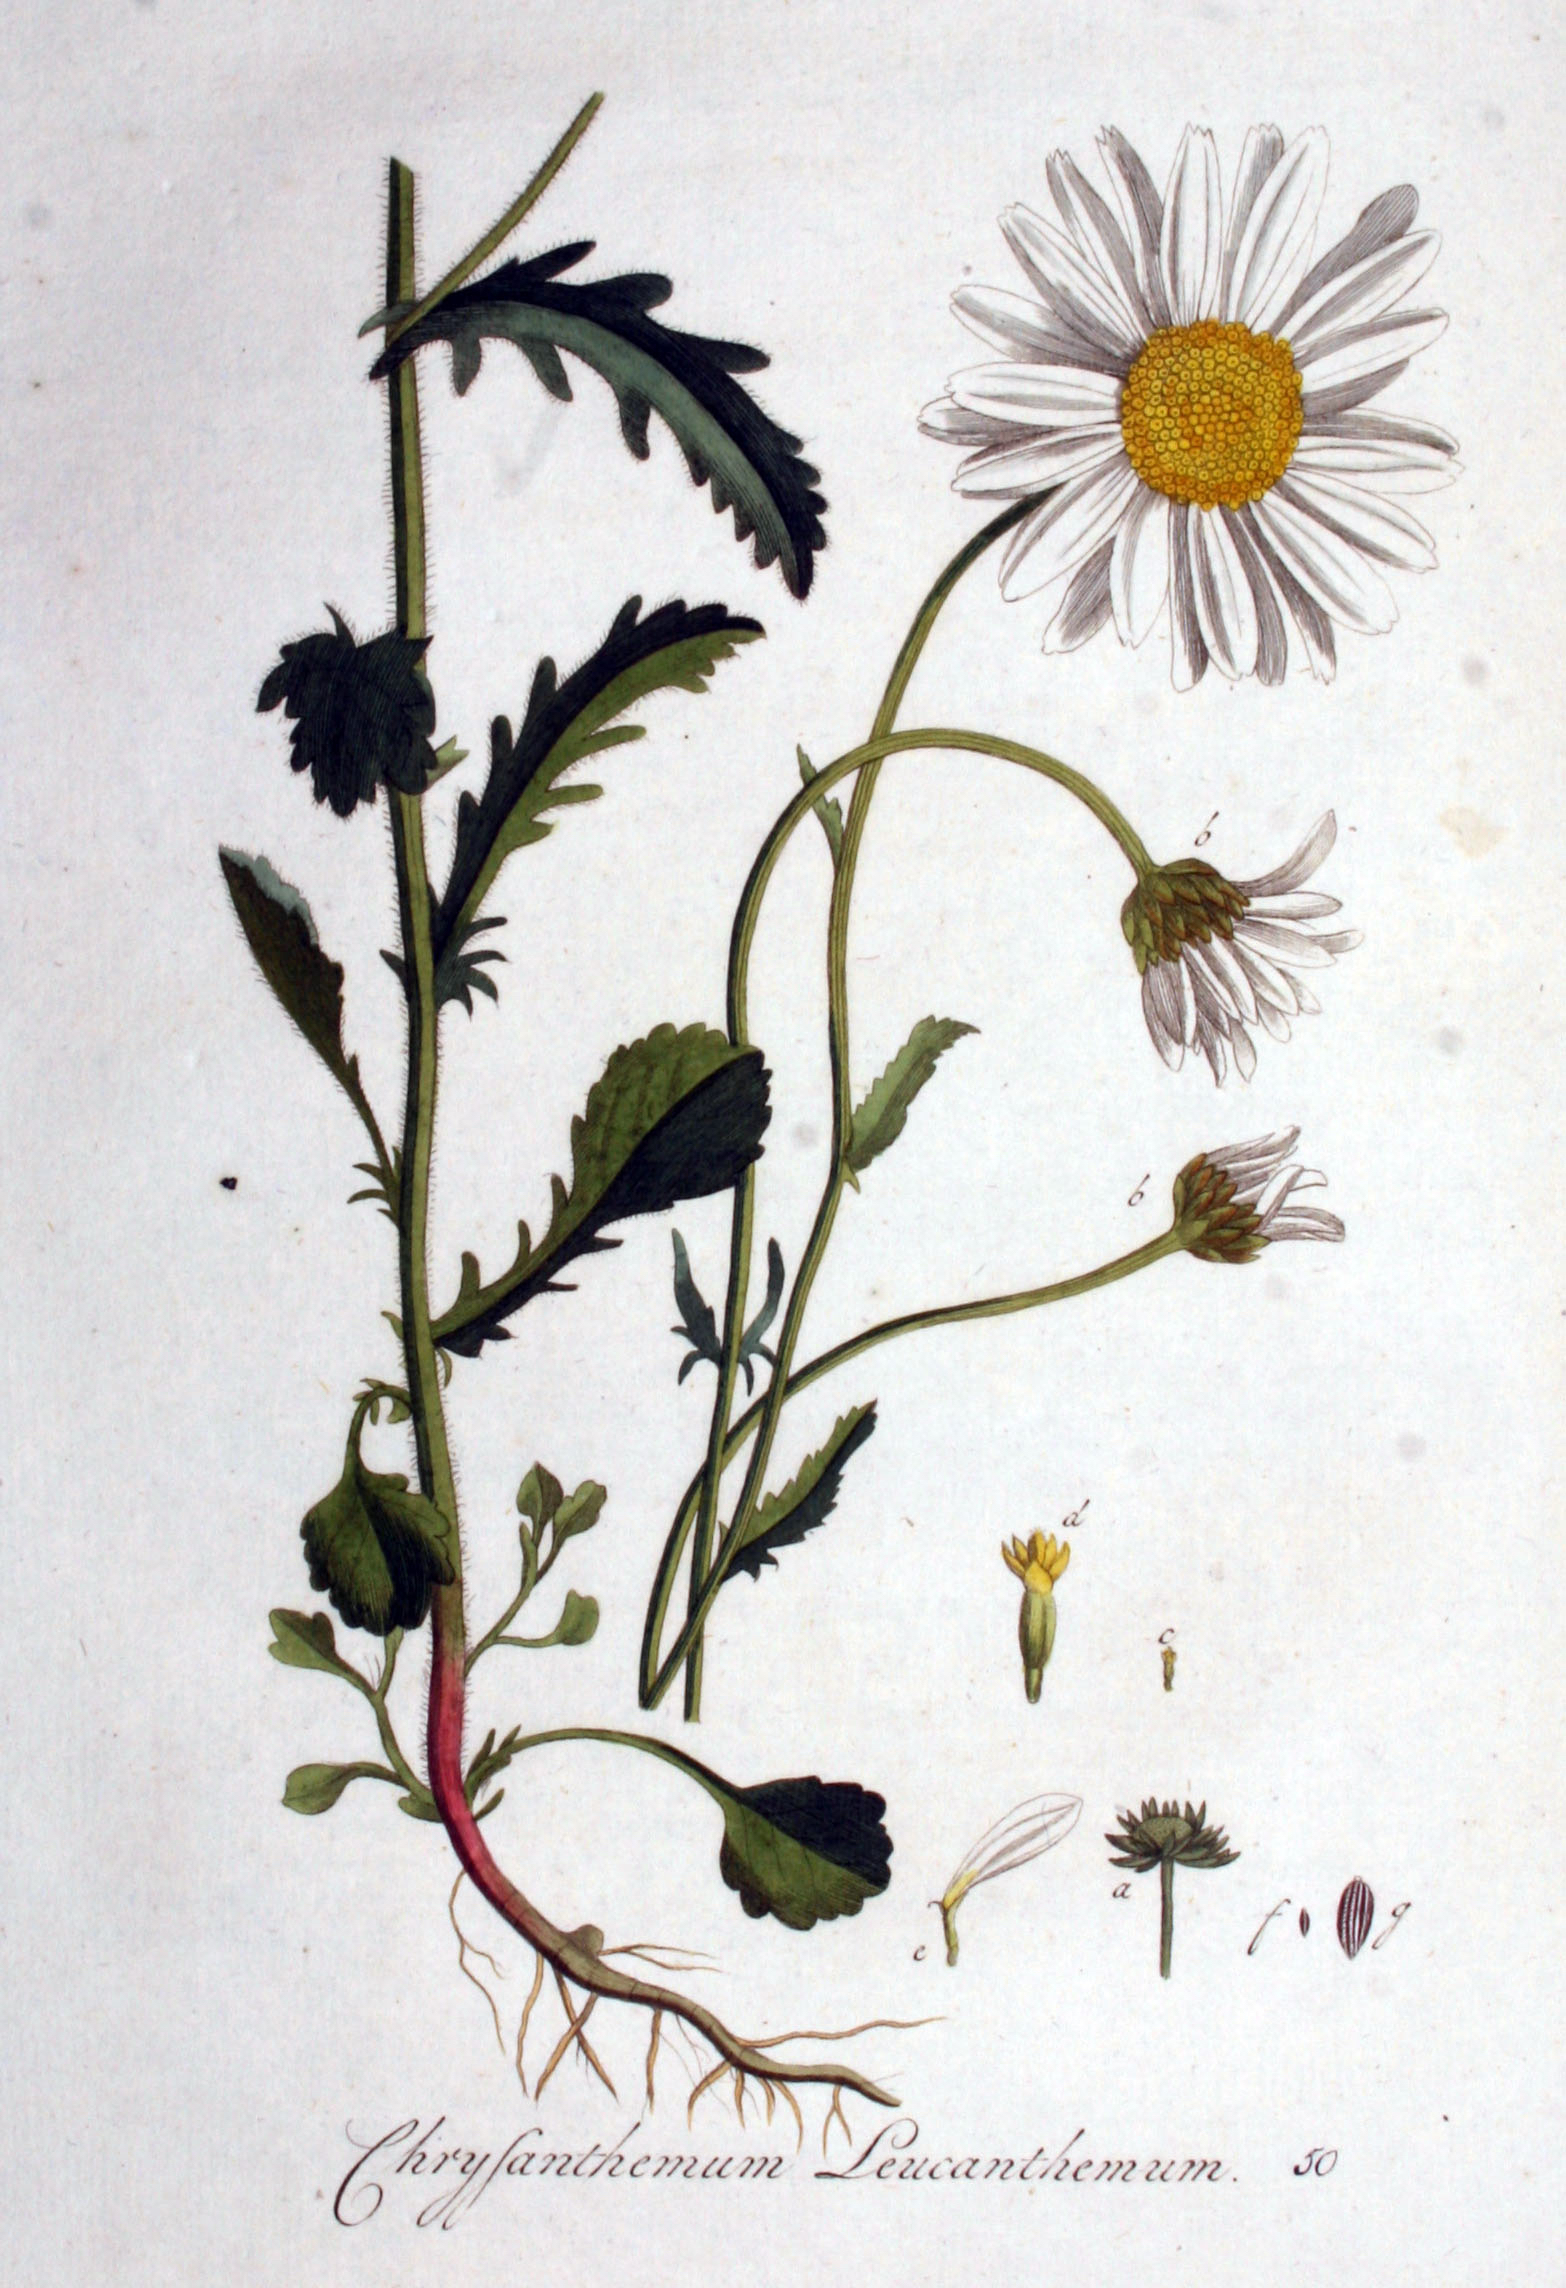 Botonical illustration of a Daisy circa 1800.